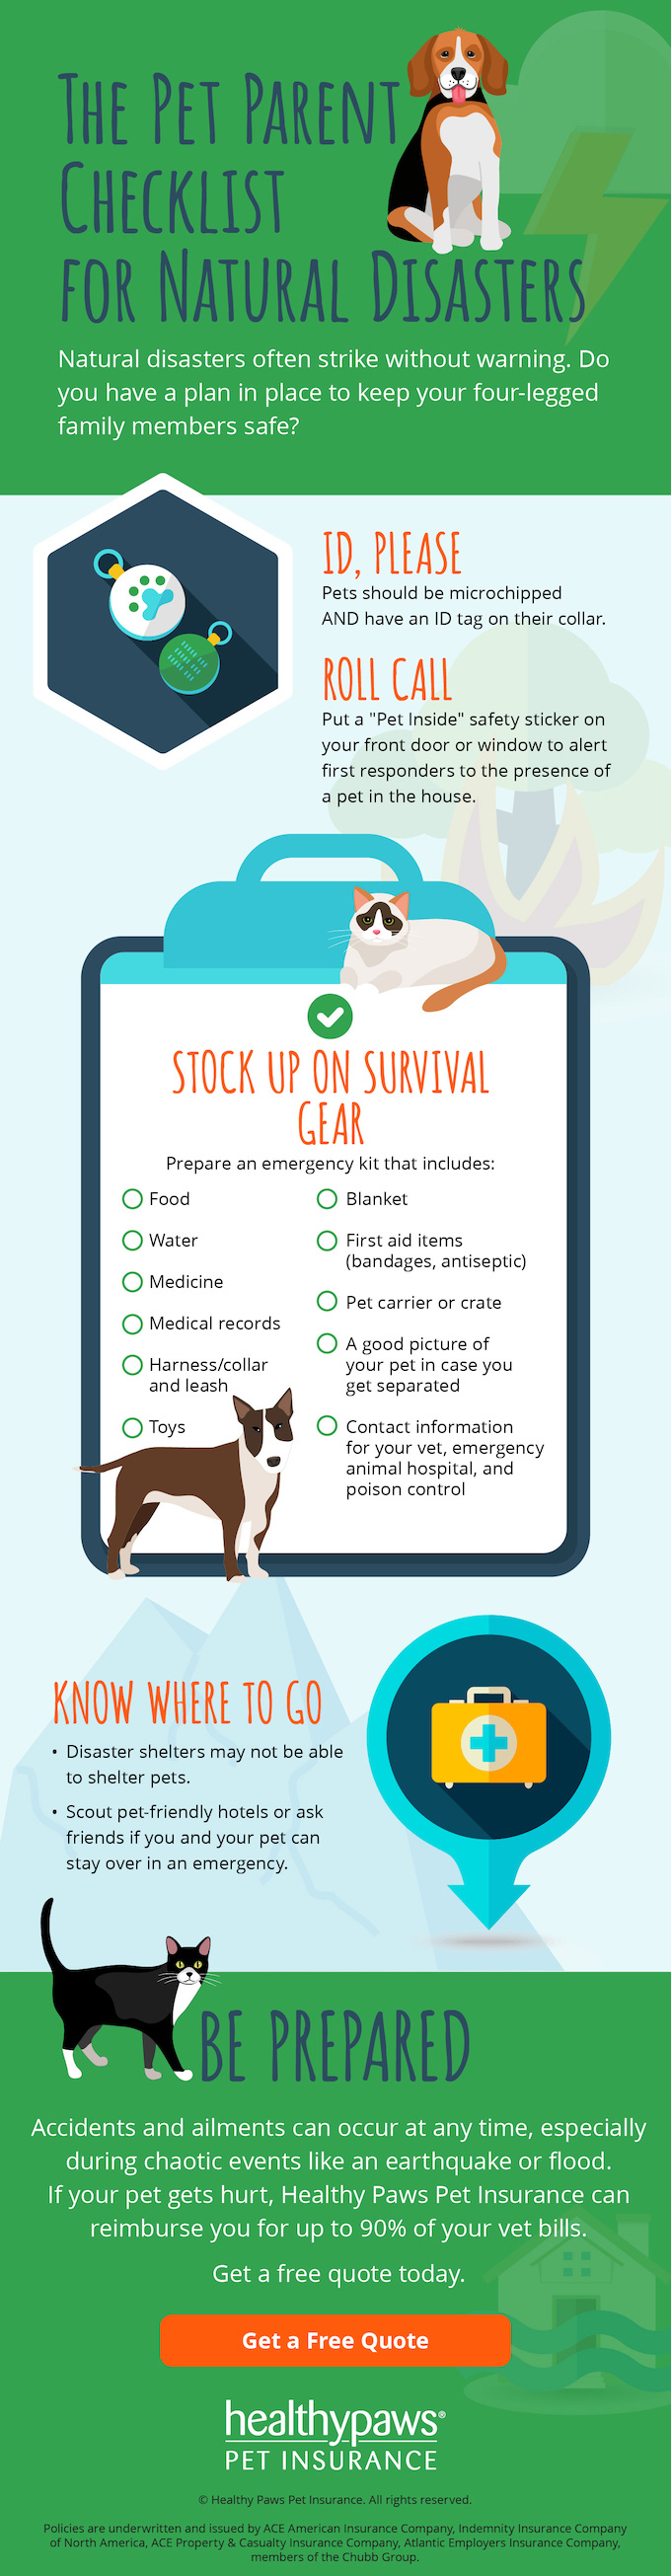 Pet disaster preparedness checklist infographic